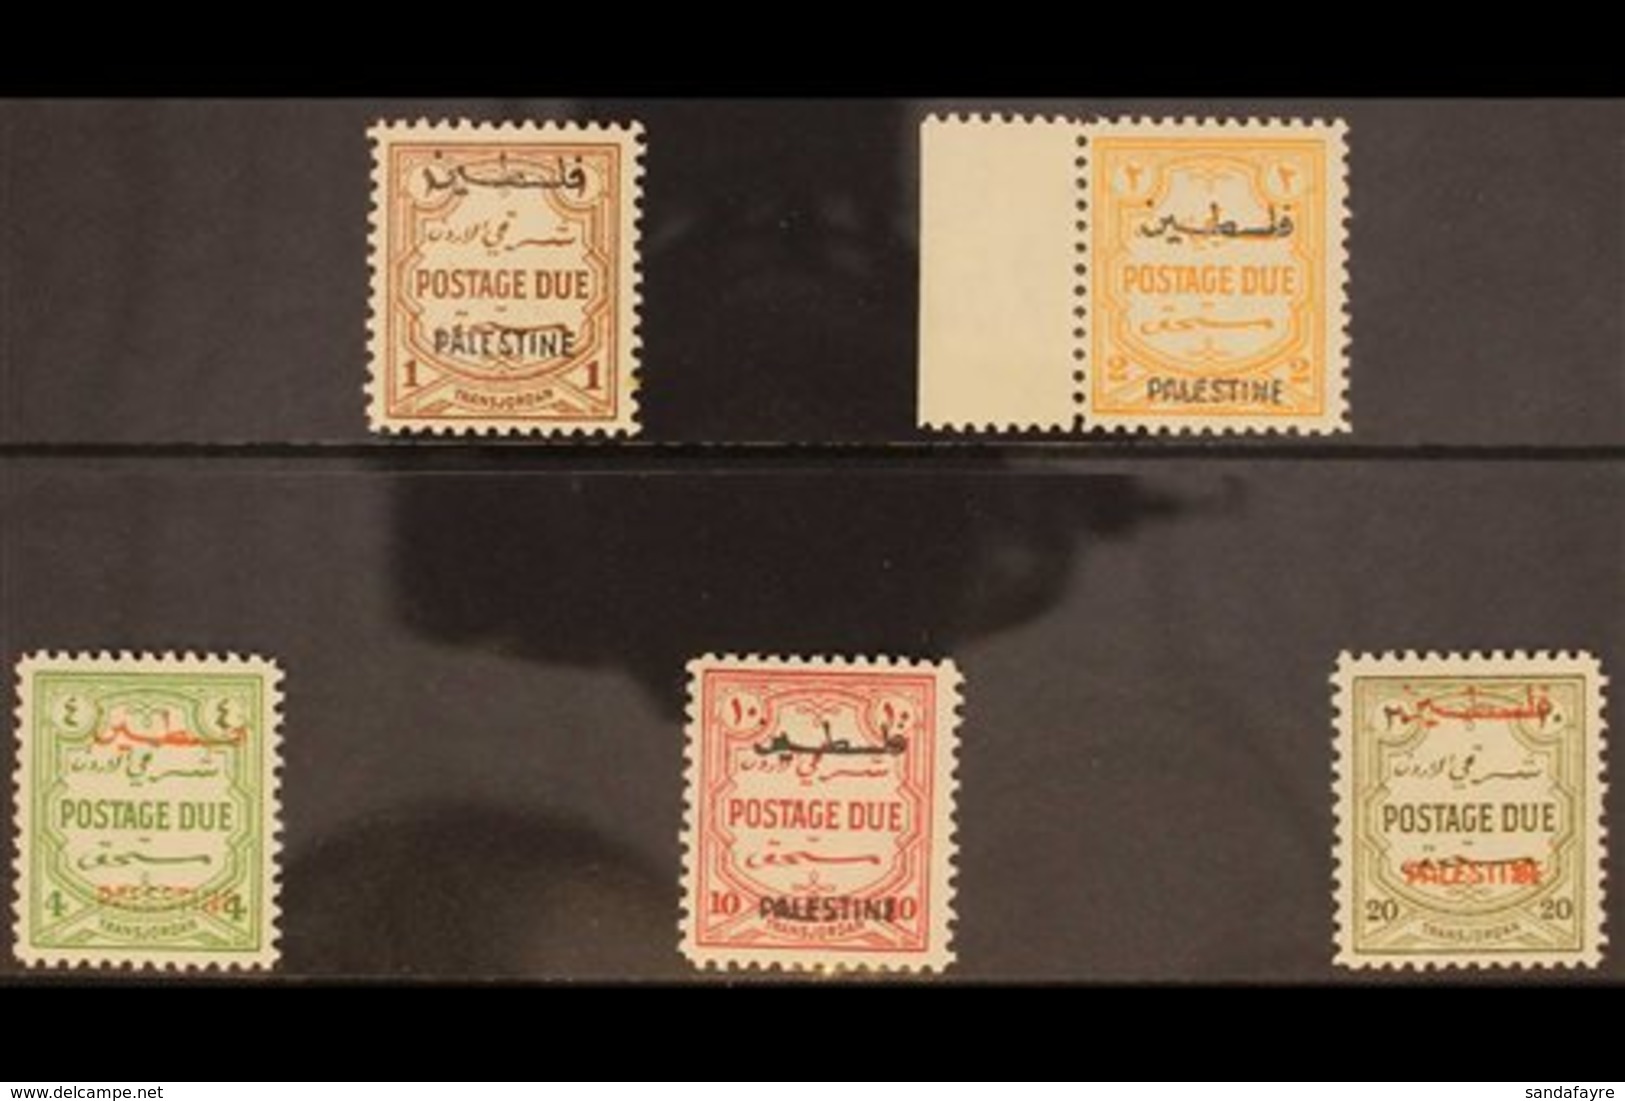 OCCUPATION OF PALESTINE  POSTAGE DUE. 1948 Multi Script Wmk - Perf 12 Set, SG PD 25/29, Fine Mint (5 Stamps) For More Im - Jordanien